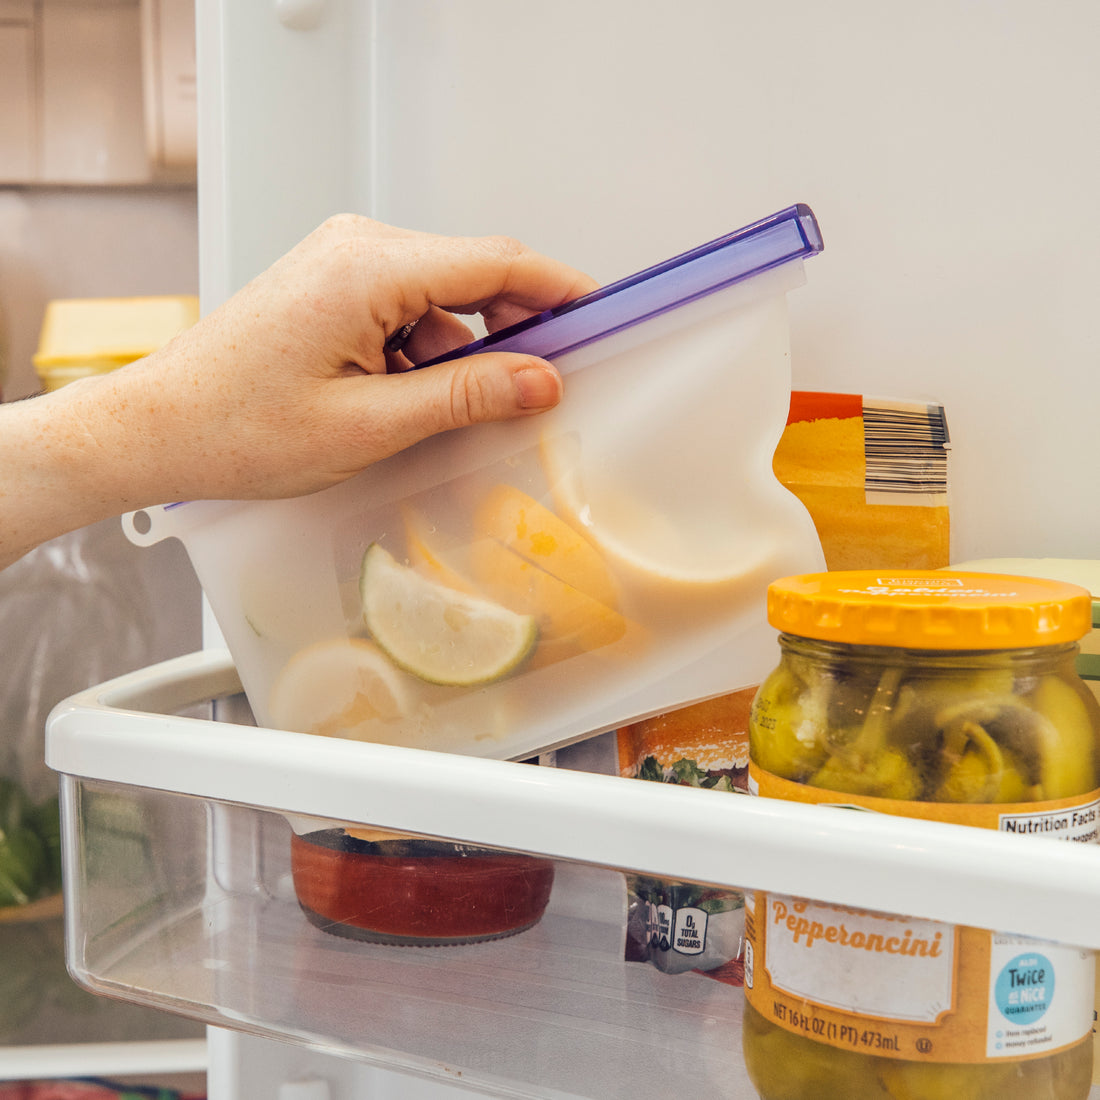 Reusable Food Storage Bags Freezer & Dishwasher Safe 6 Pack 3